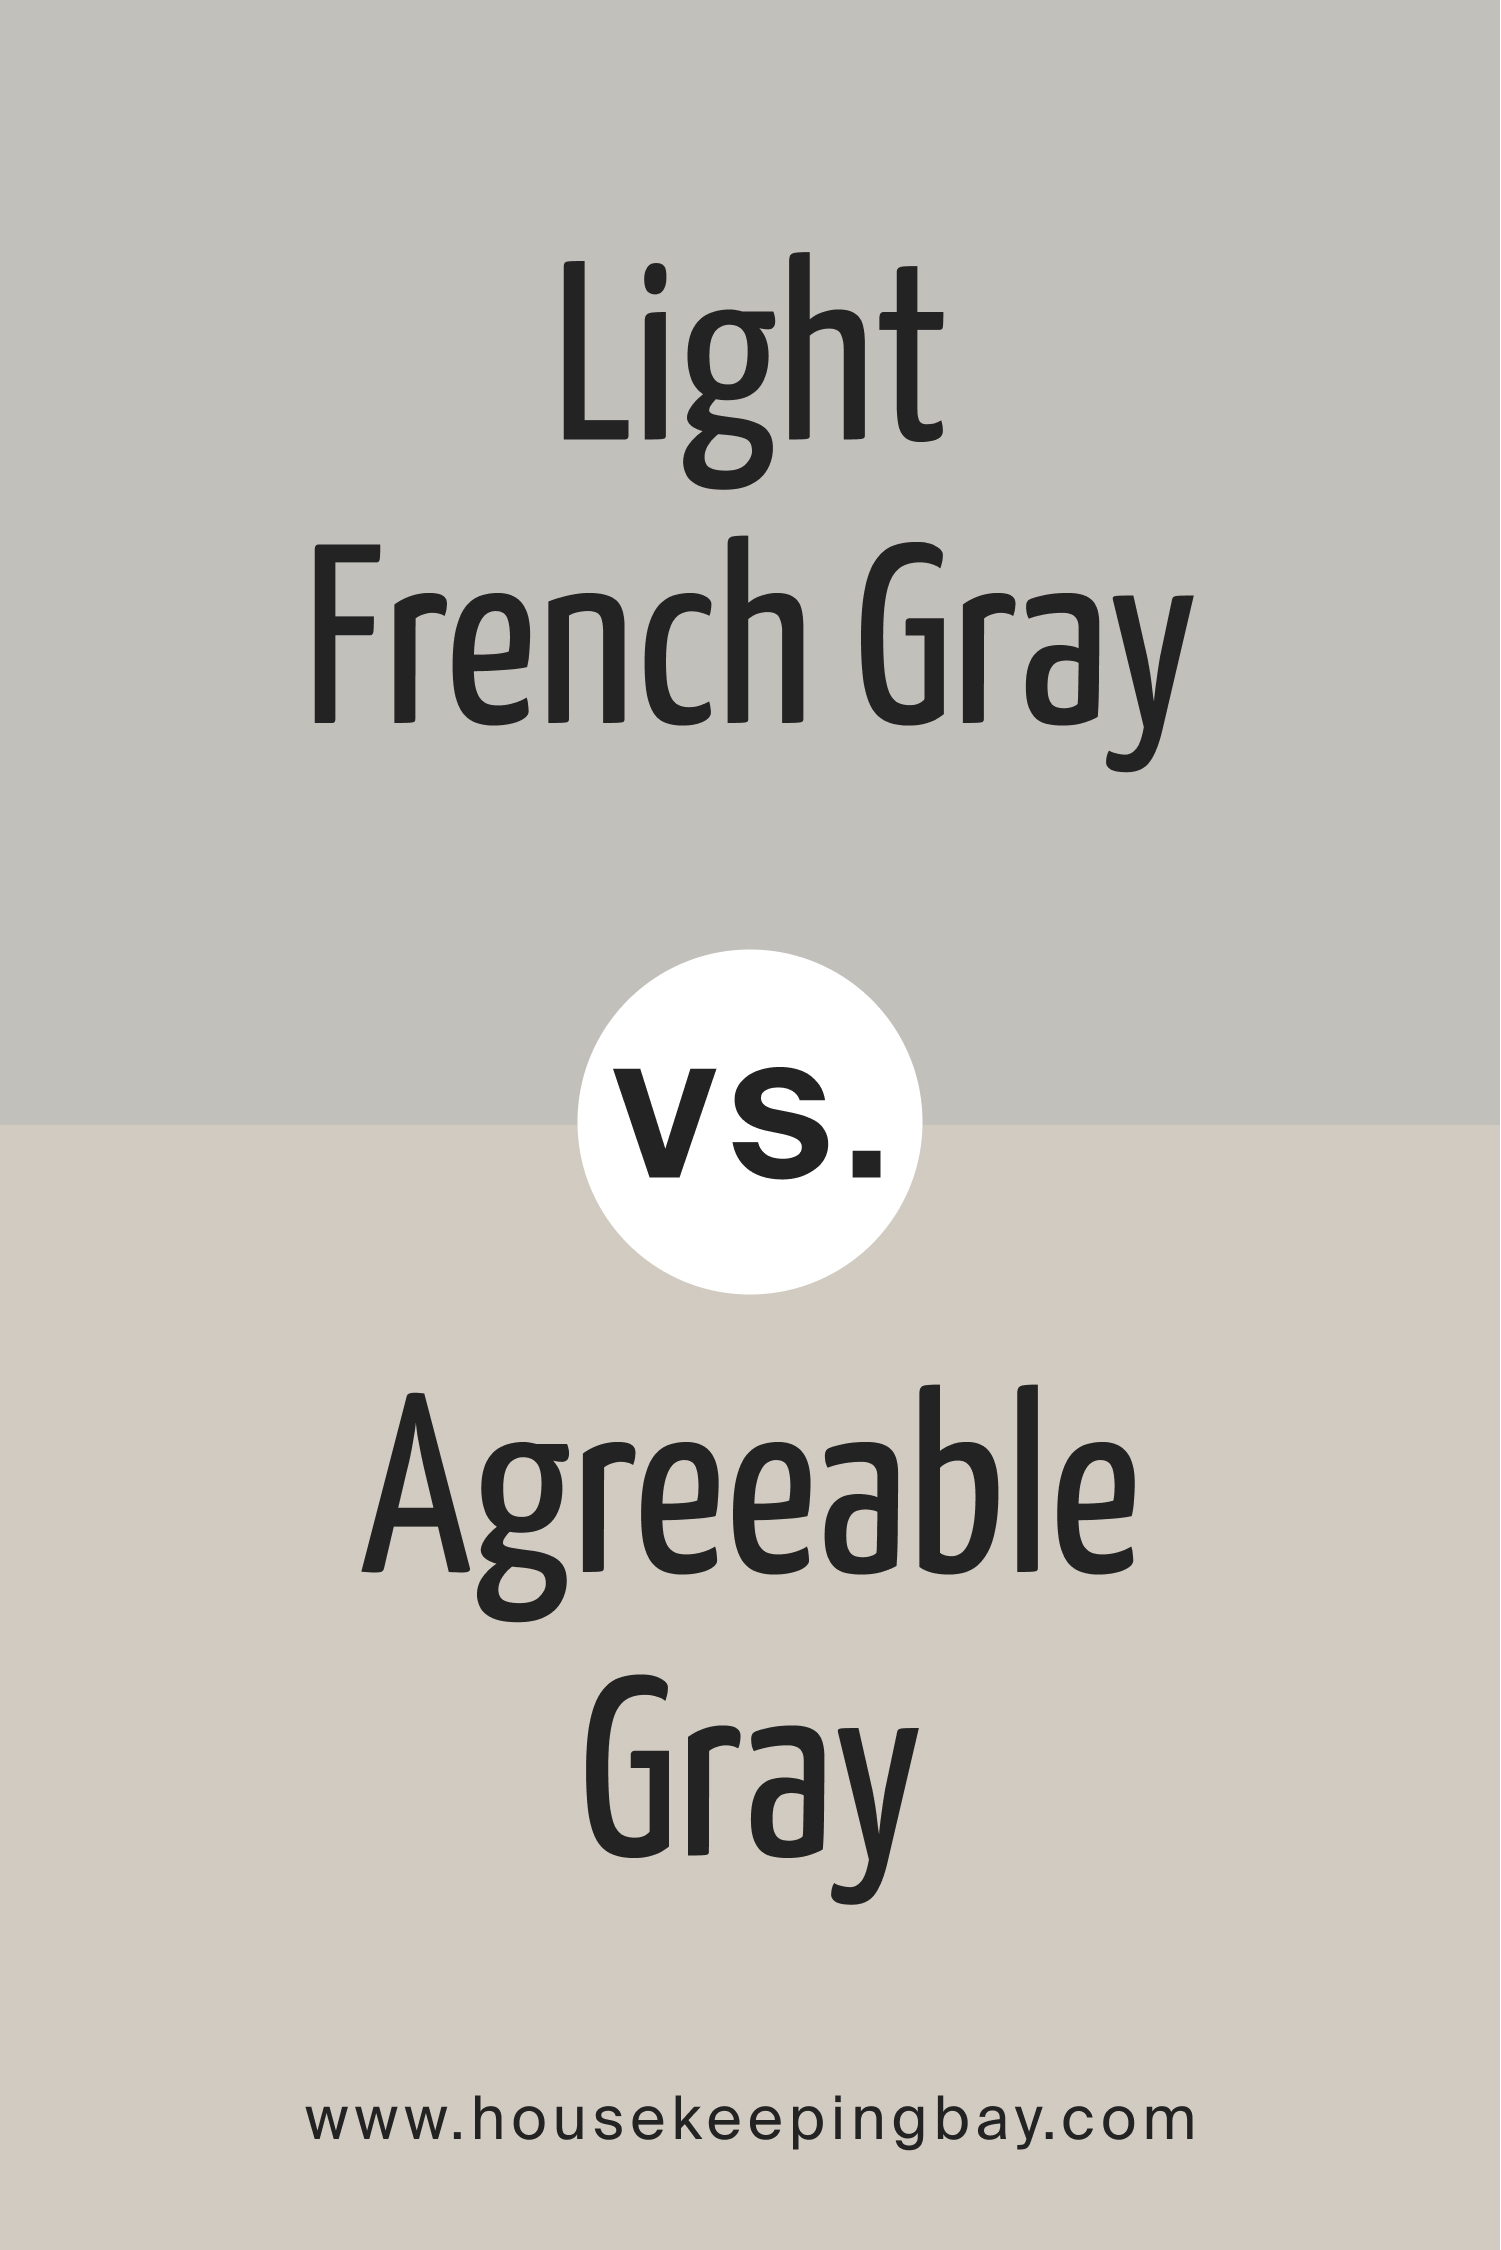 Light French Gray vs Agreeable Gray